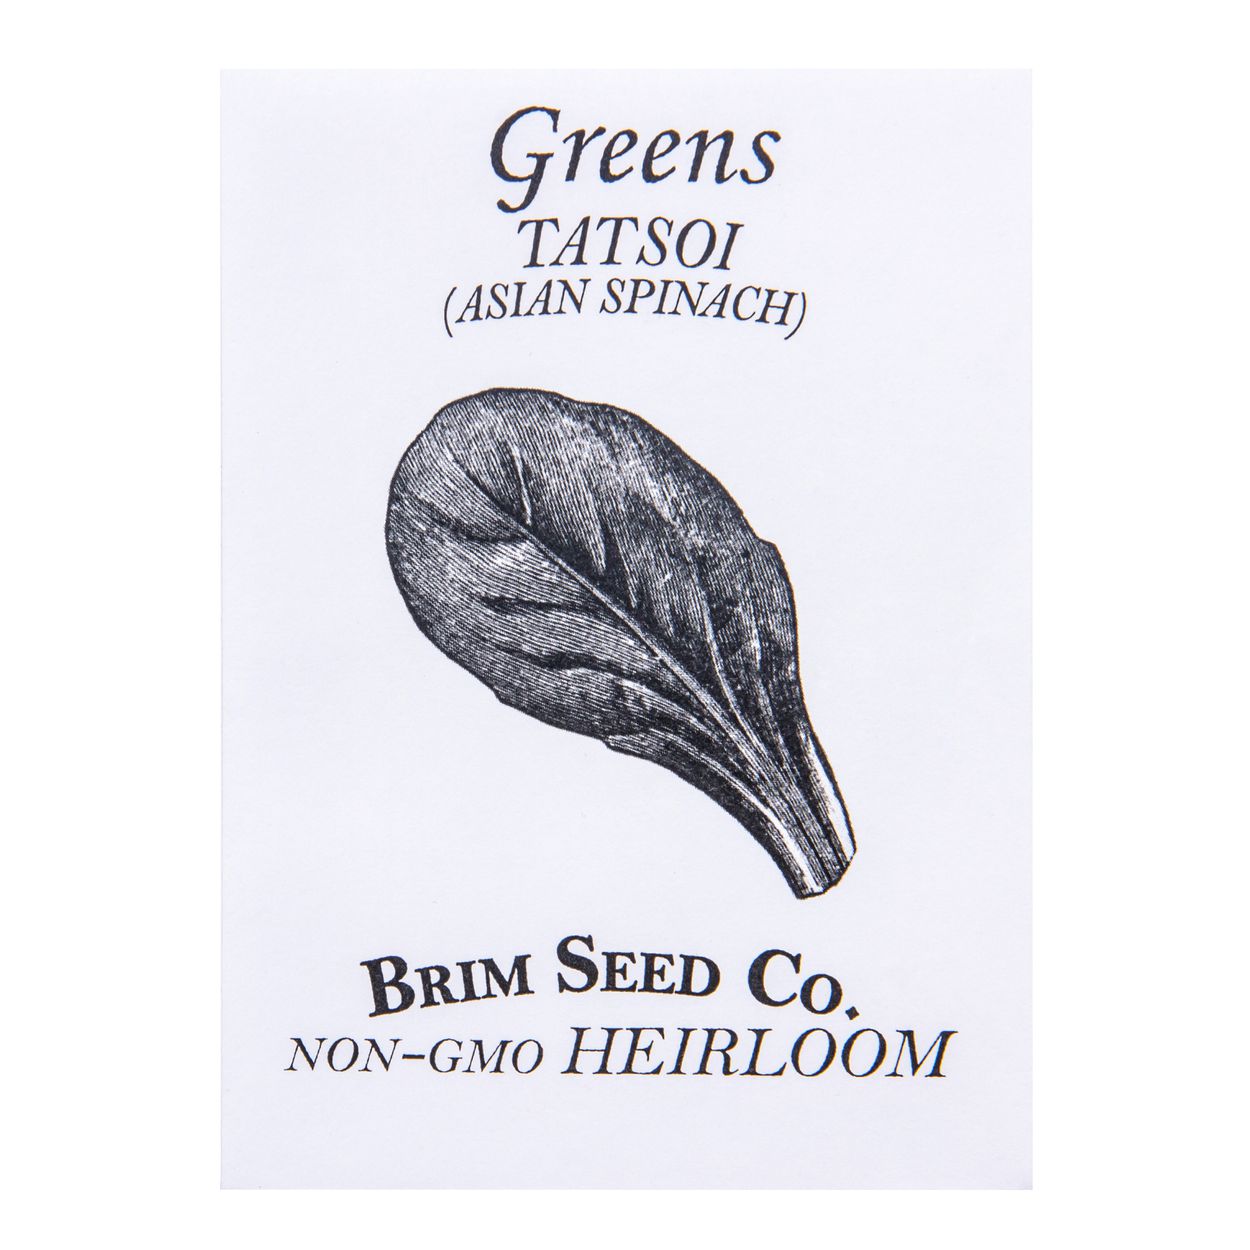 Brim Seed Co. - Tatsoi Asian Spinach Greens Heirloom Seed